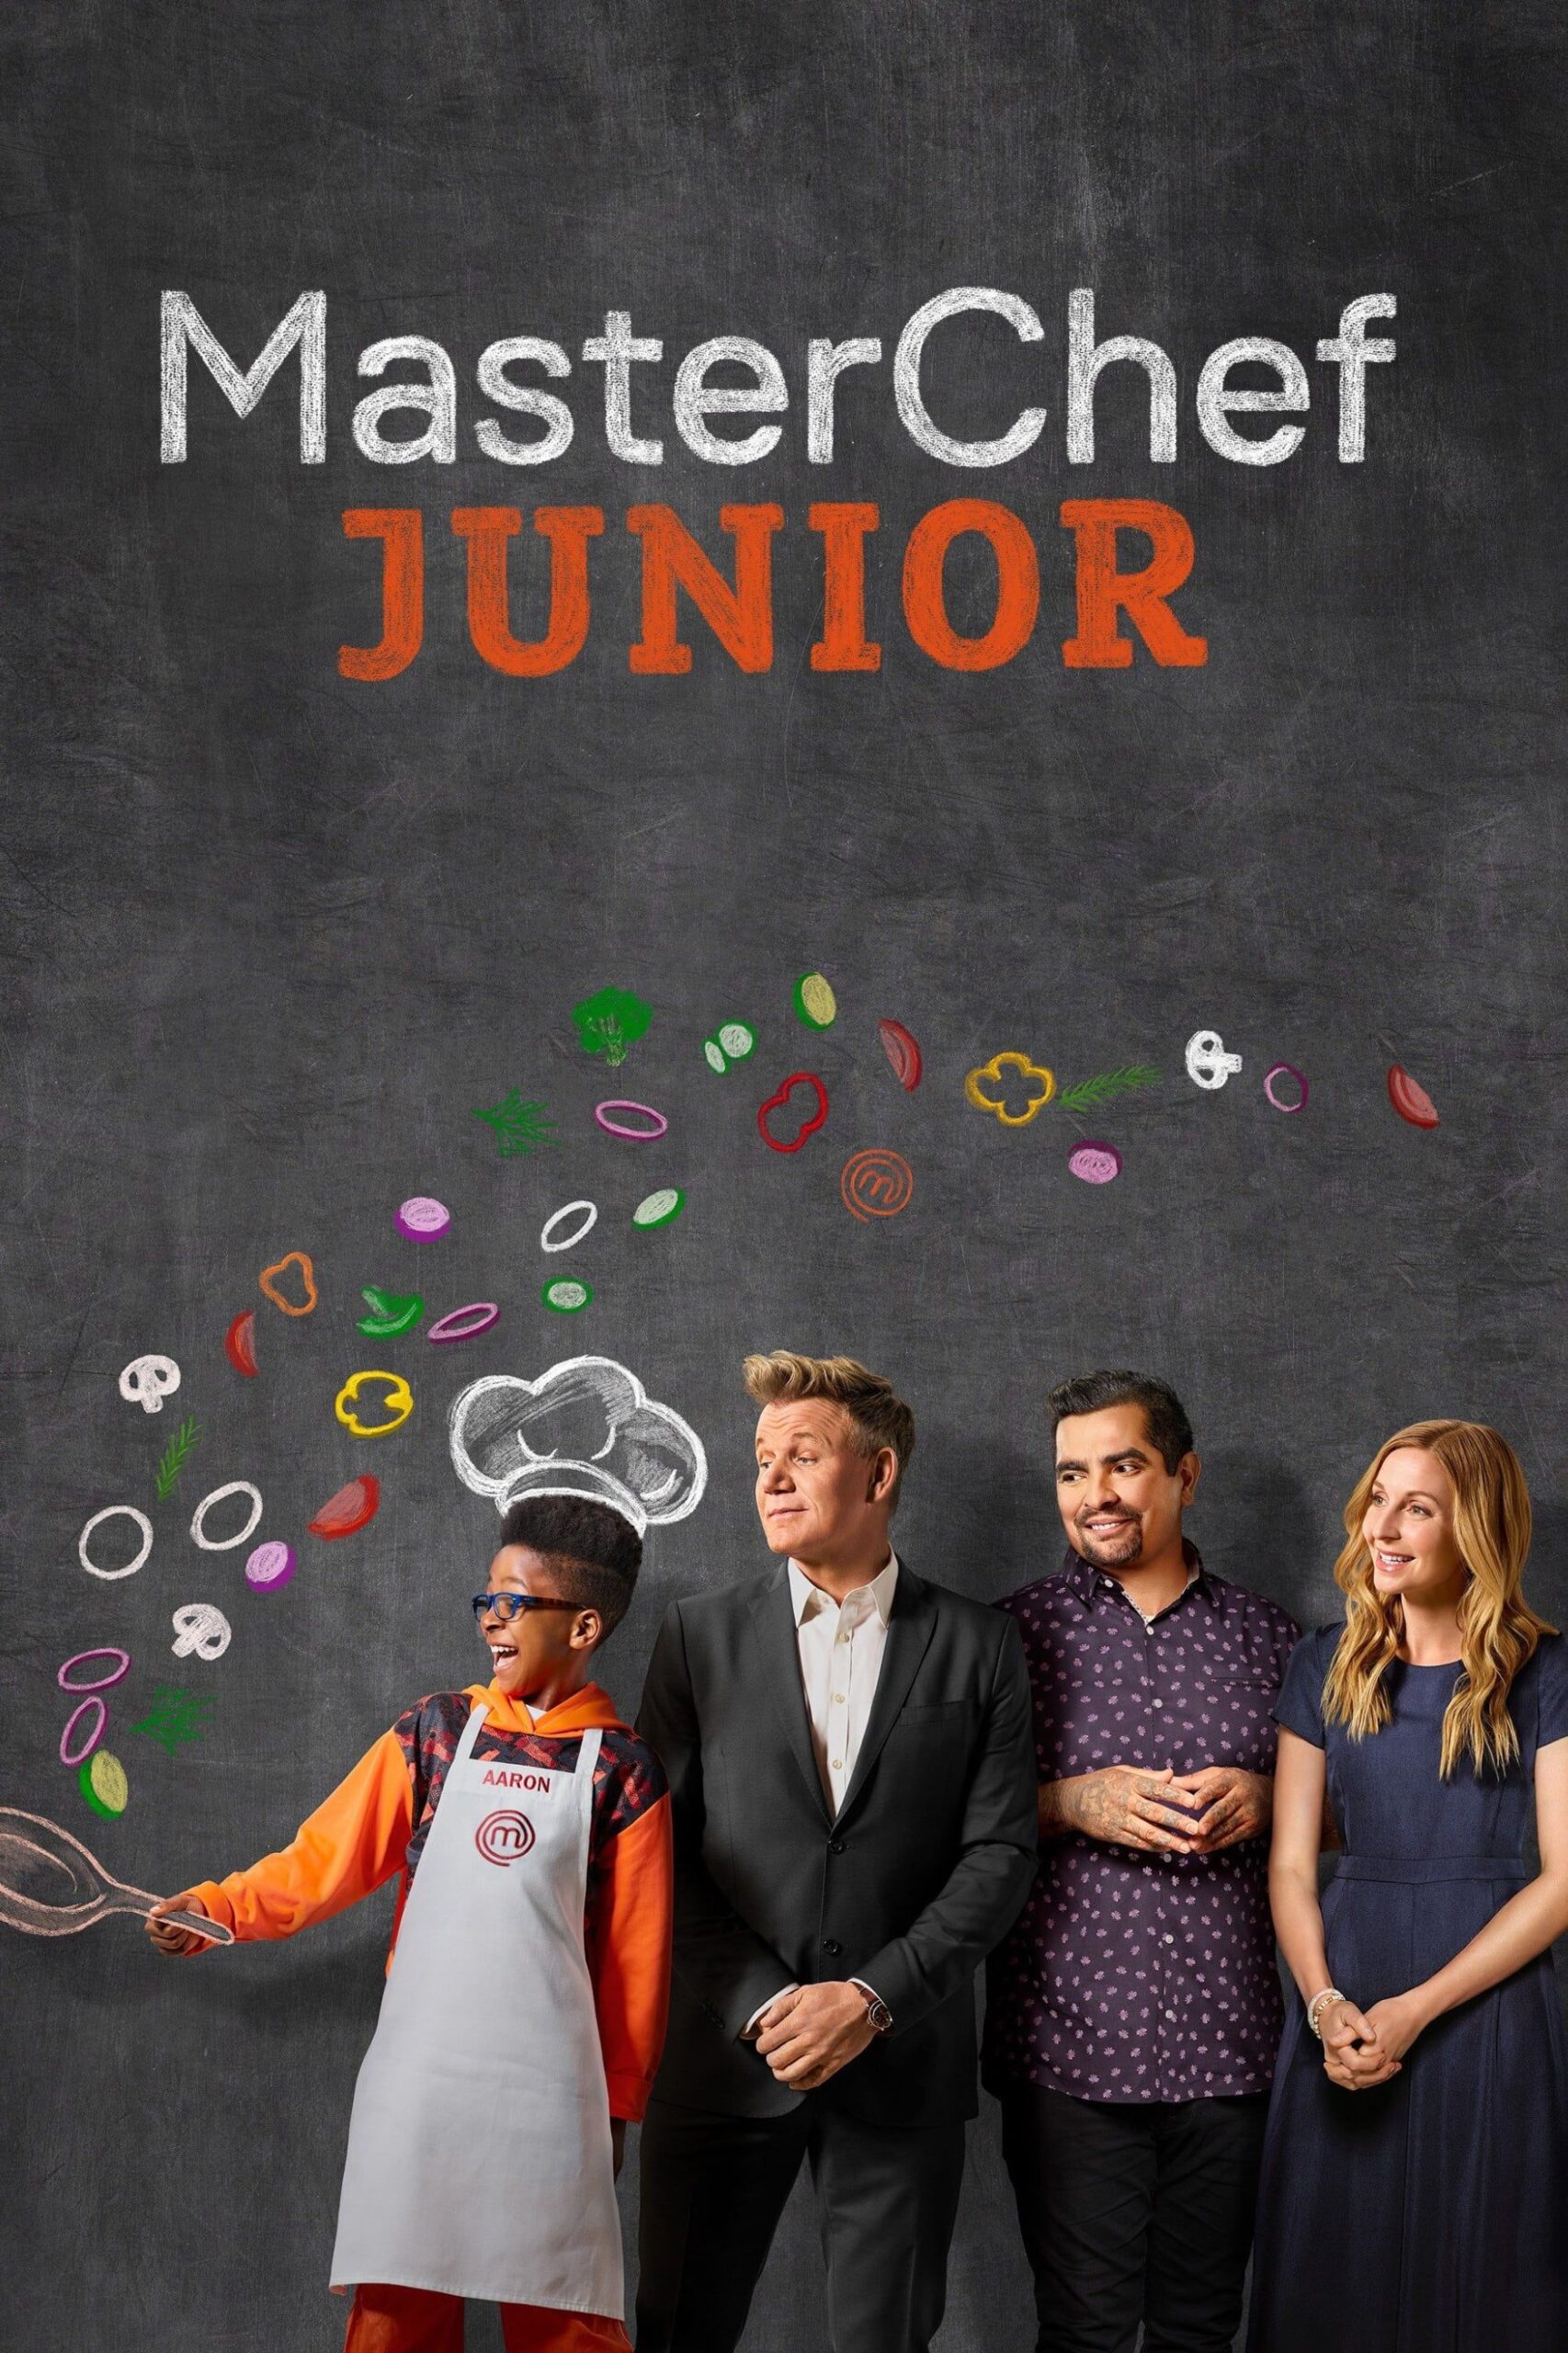 MasterChef Junior teaser image